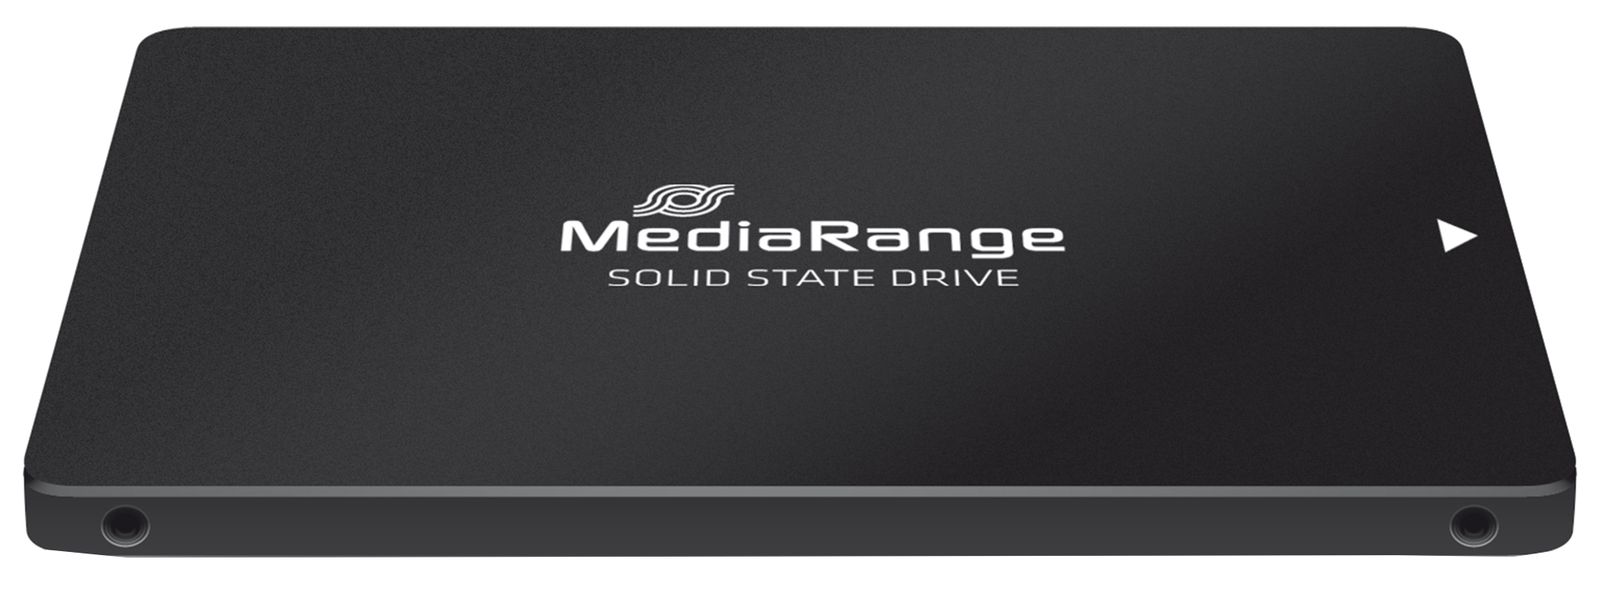 MEDIARANGE SSD MR1003 480GB von Mediarange